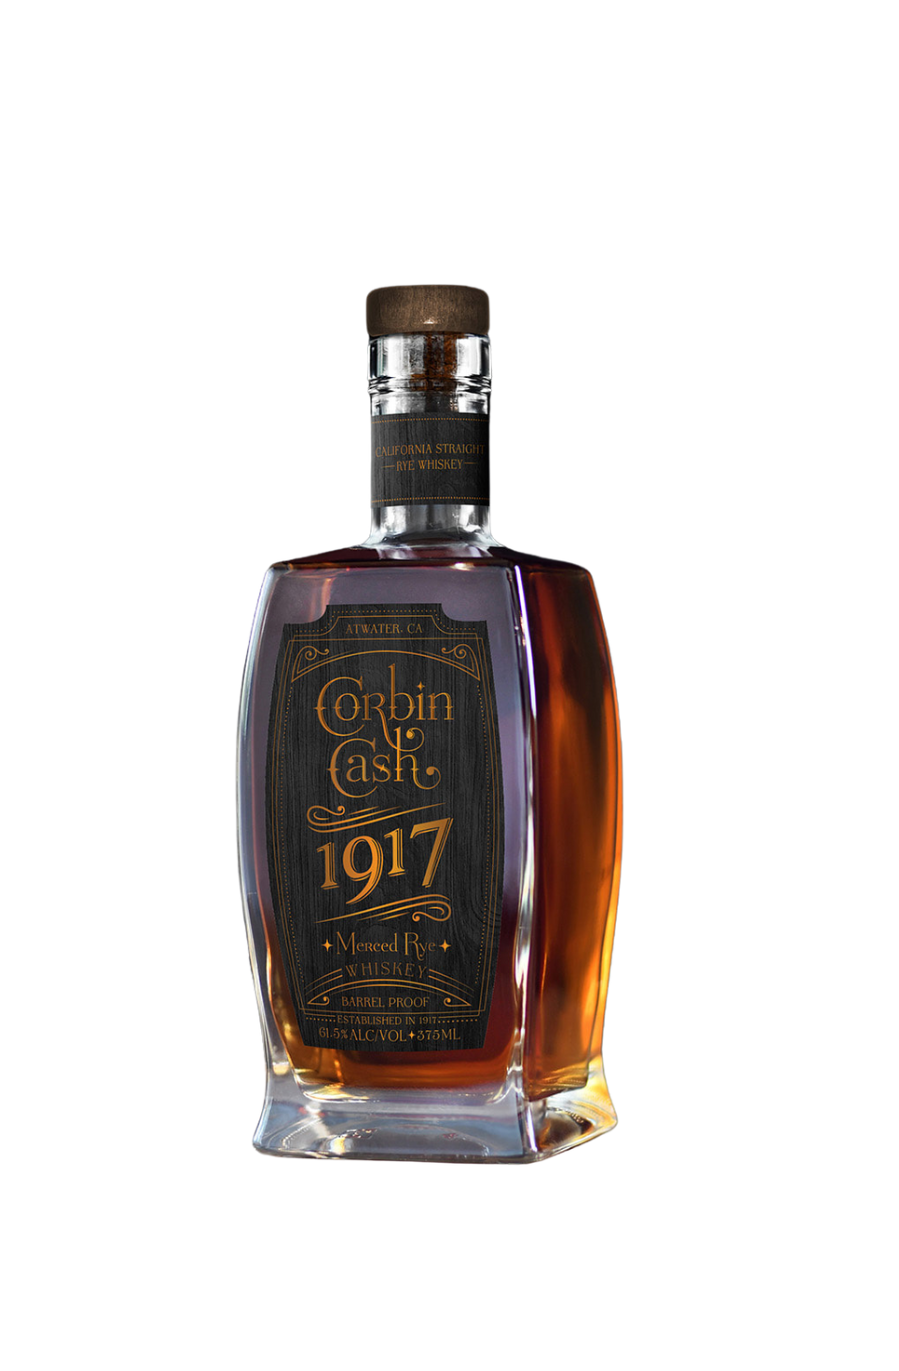 Corbin Cash 1917 Merced Rye Whiskey - 750 ml